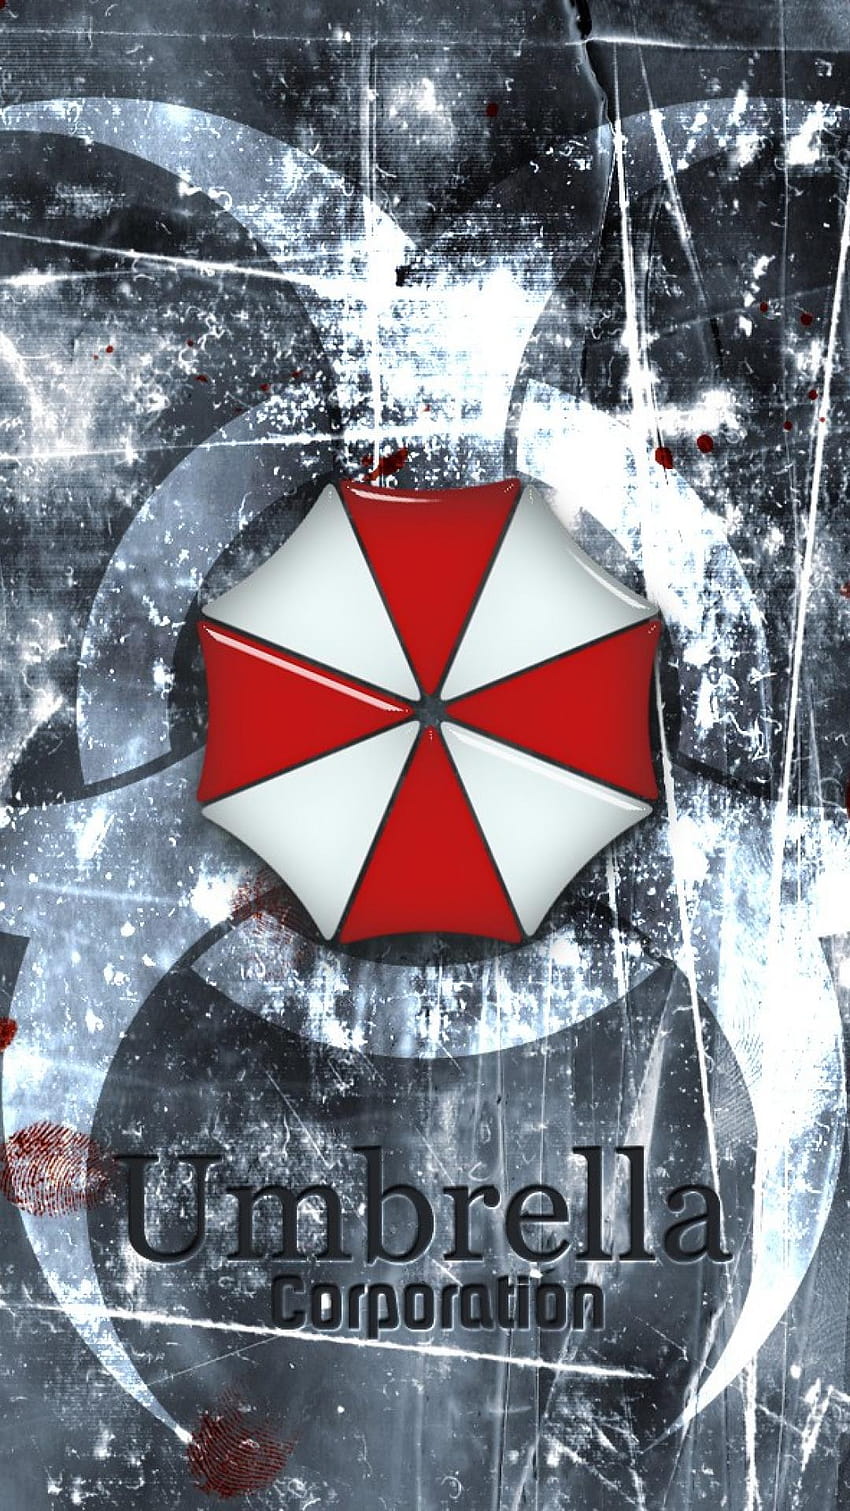 Umbrella Corporation Wallpaper by puffthemagicdragon92 on DeviantArt  Resident  evil game Resident evil Umbrella corporation